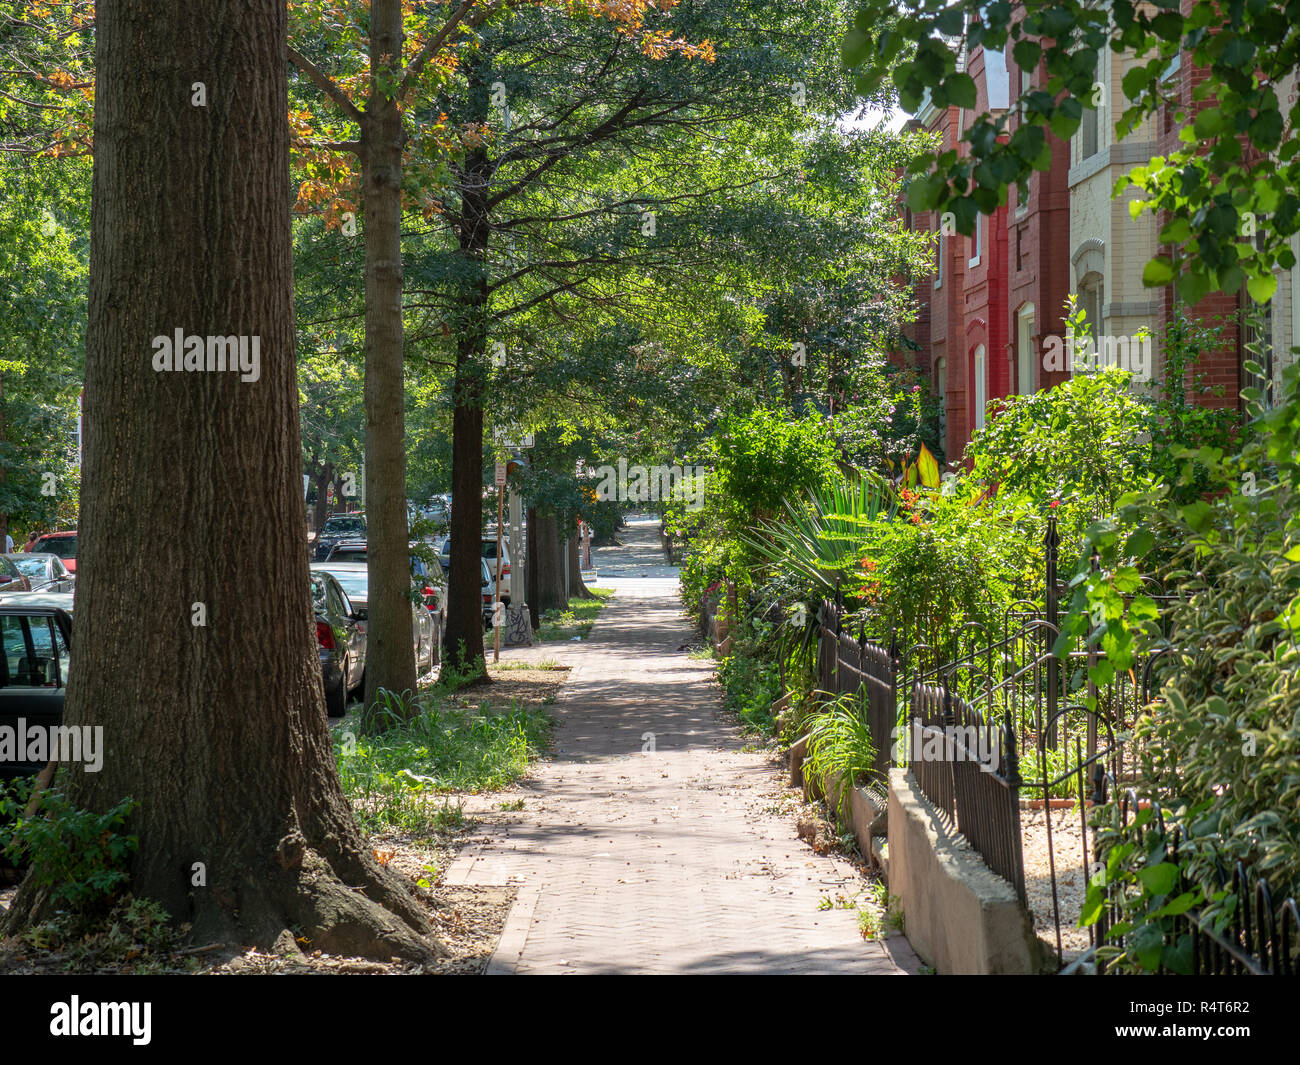 Scenic neighborhood sidewalk with townhouses at H street in Washington, DC Stock Photo